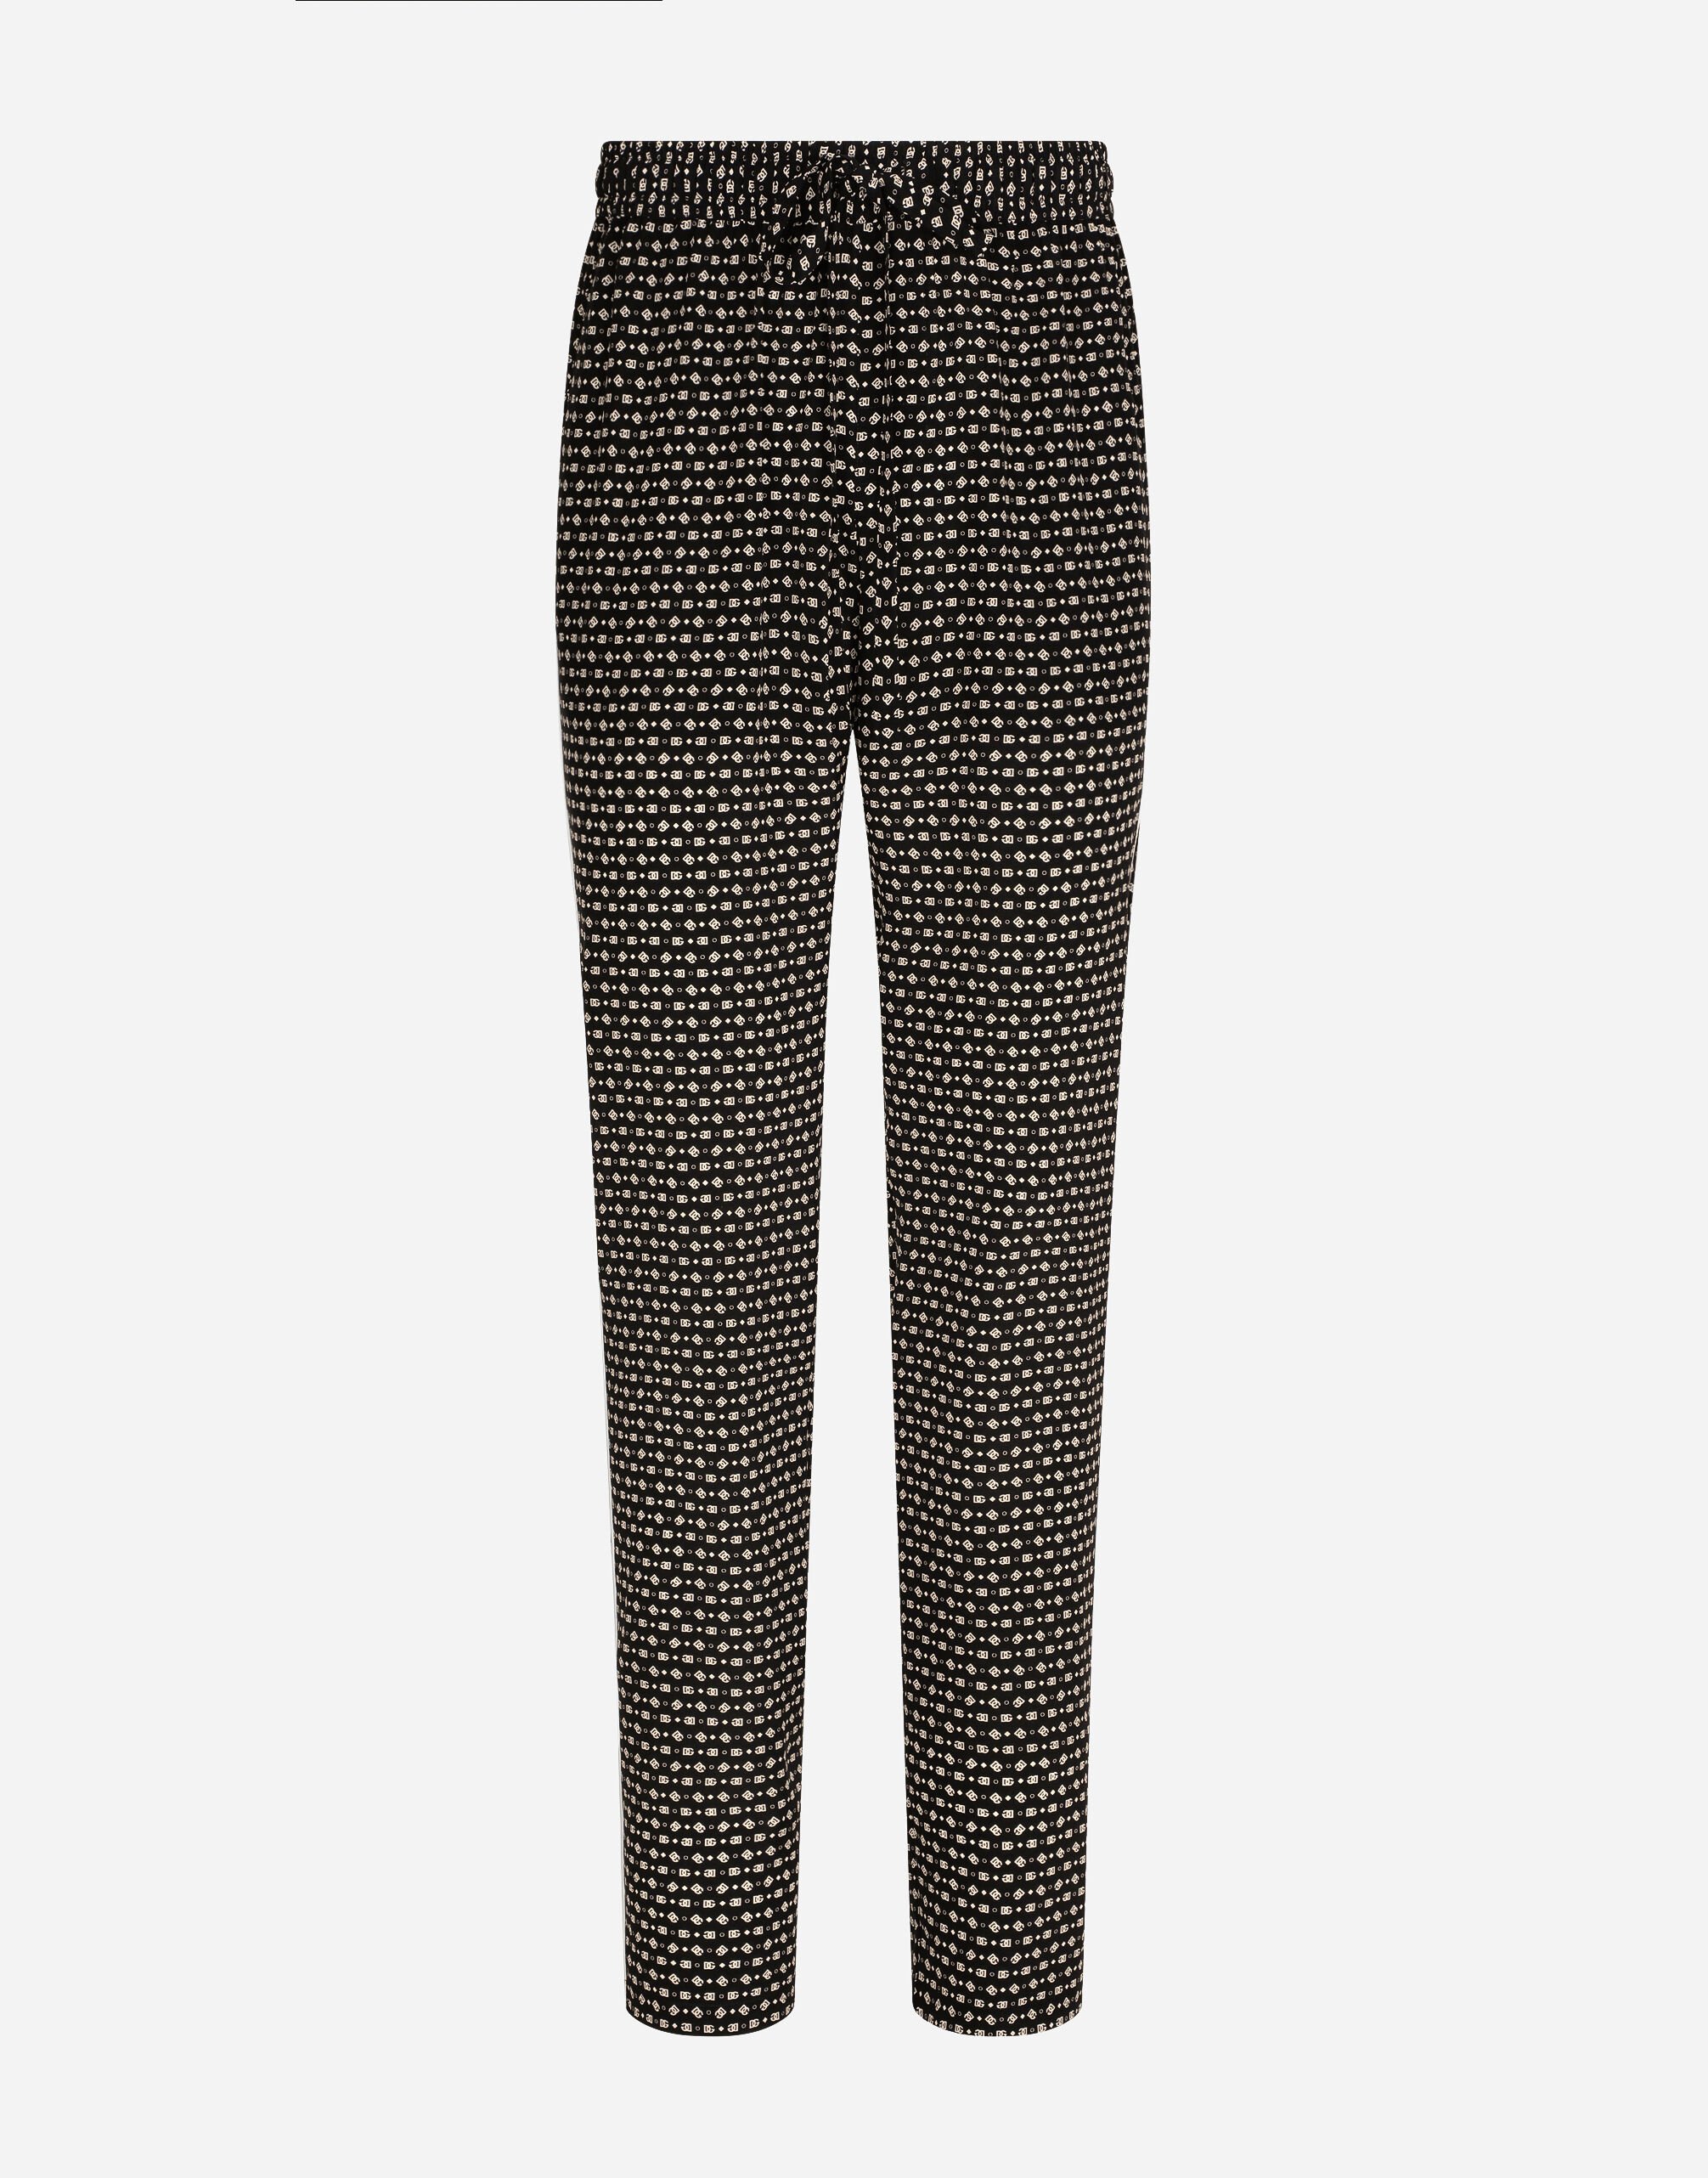 Dolce & Gabbana Crepe de chine jogging pants with DG logo print Black GY6UETFUFJR